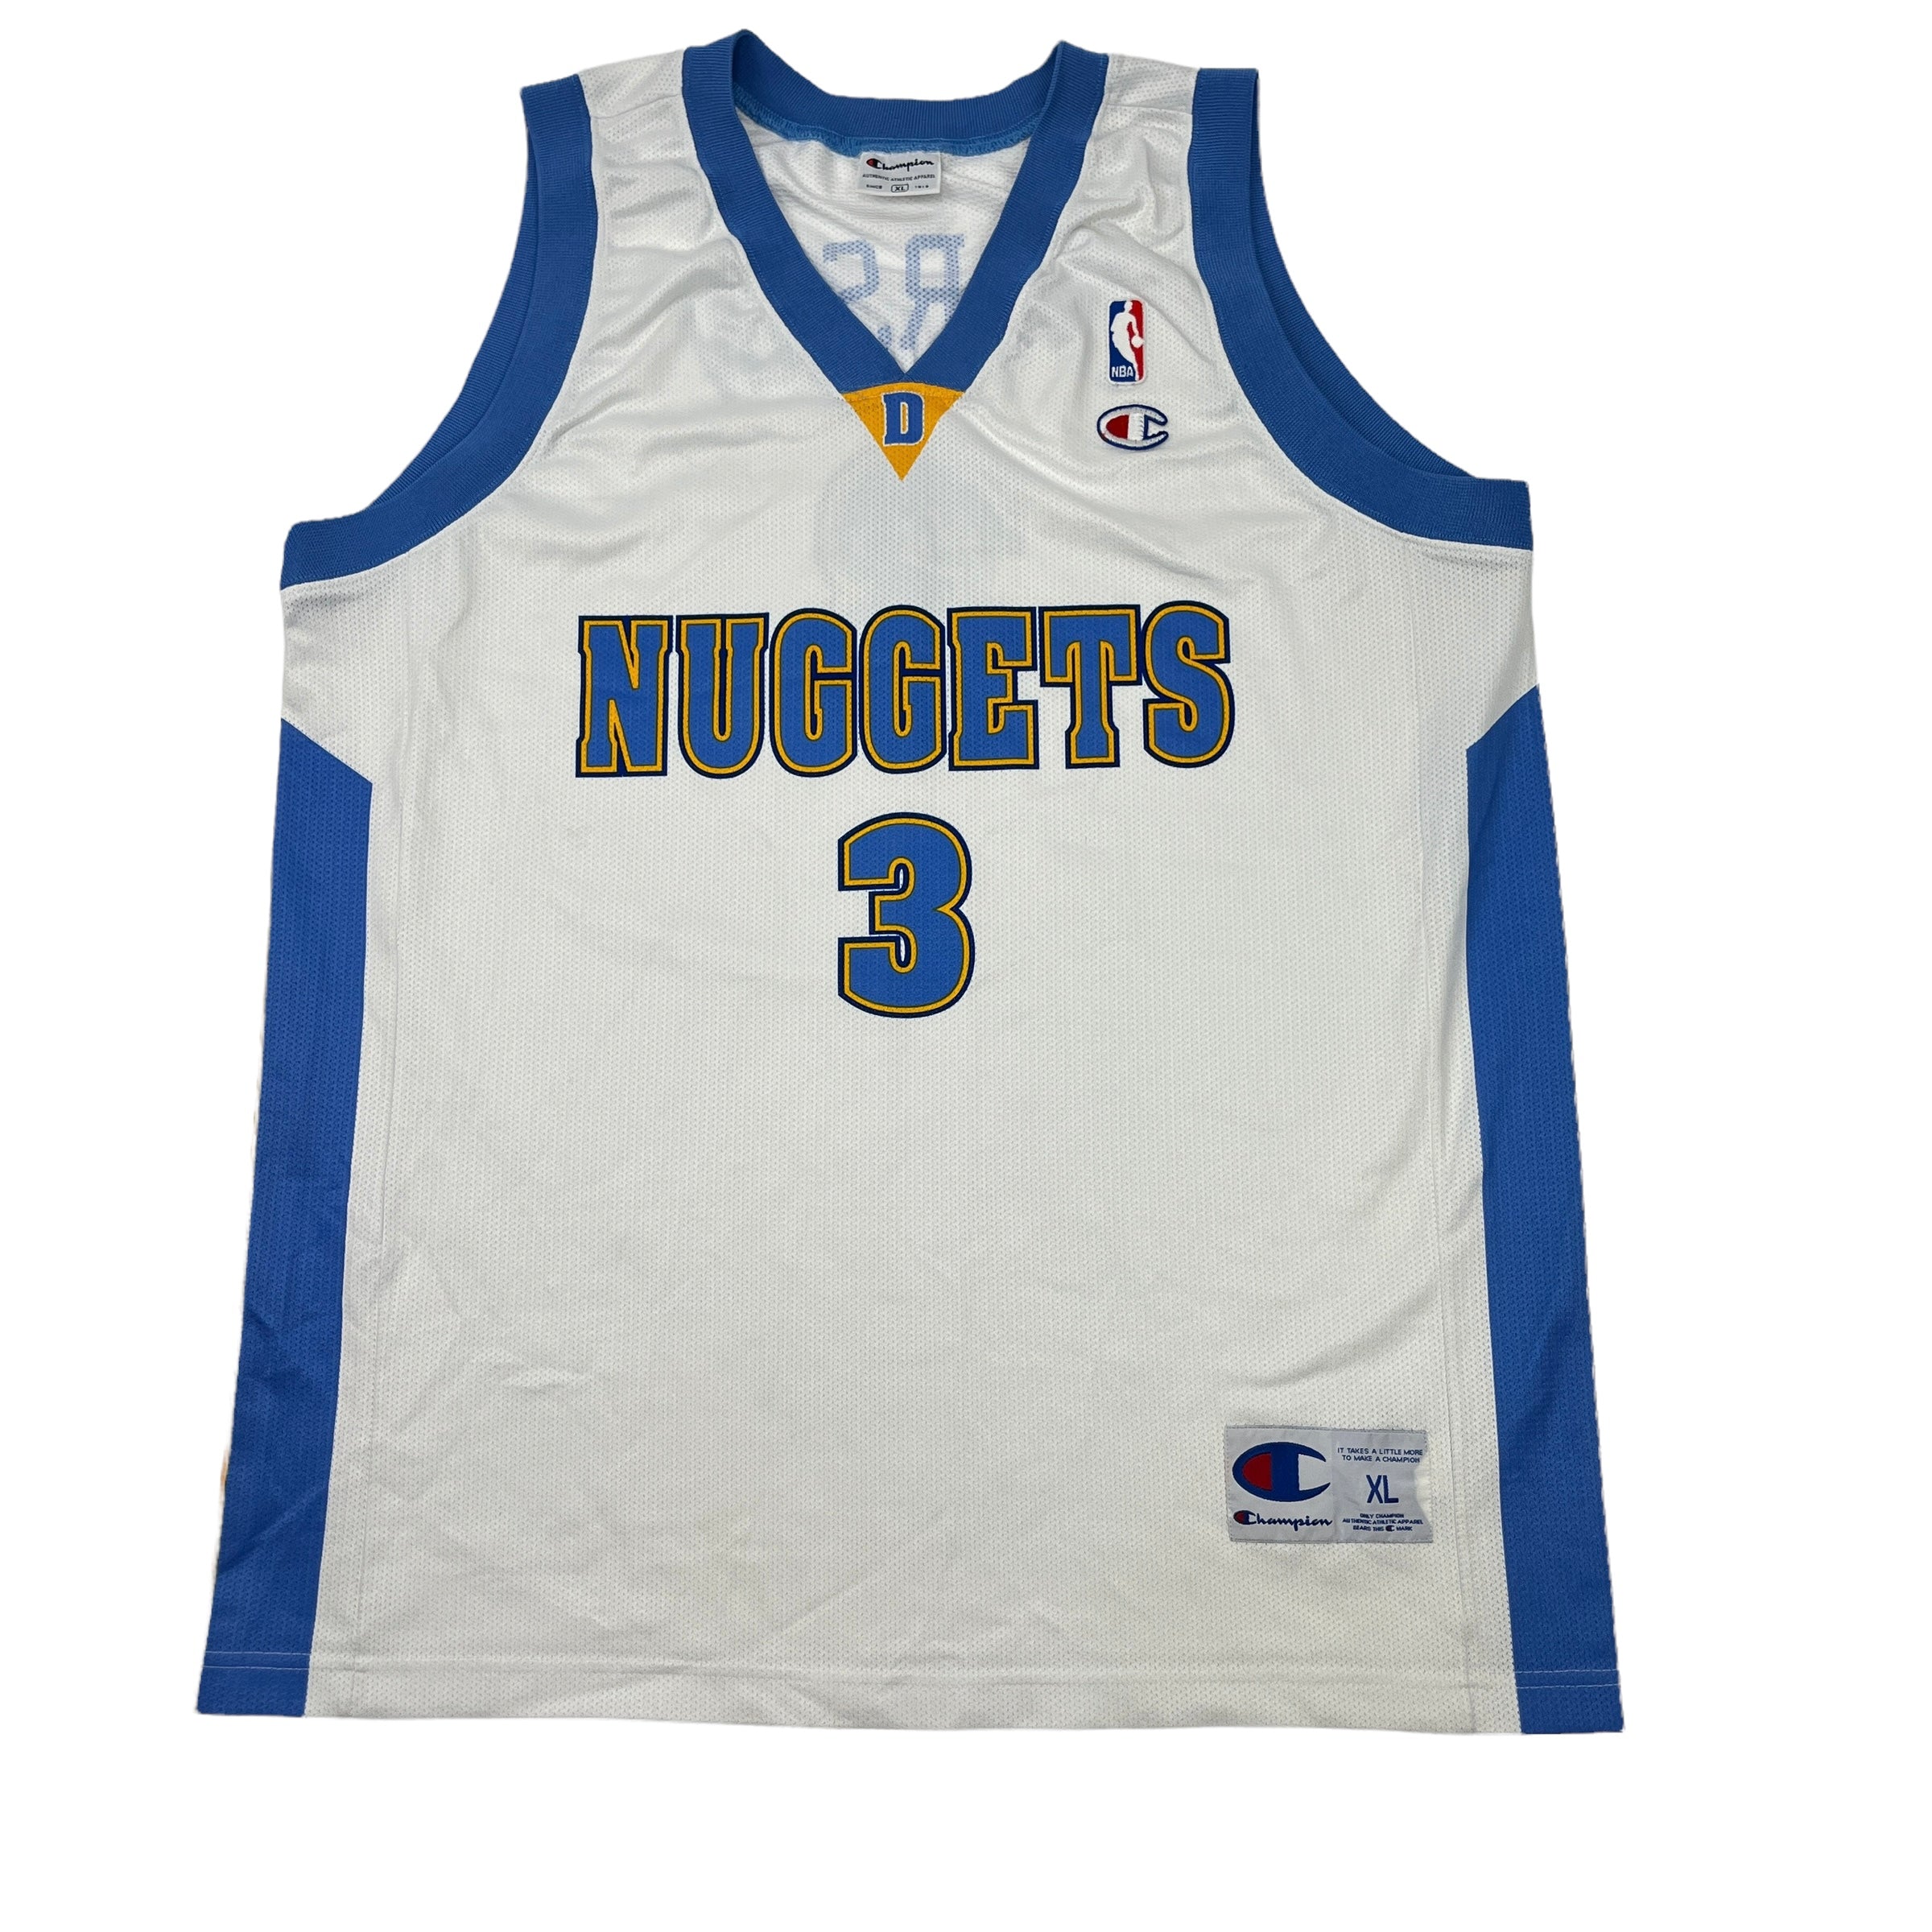 Allen Iverson Denver Nuggets NBA Jerseys for sale